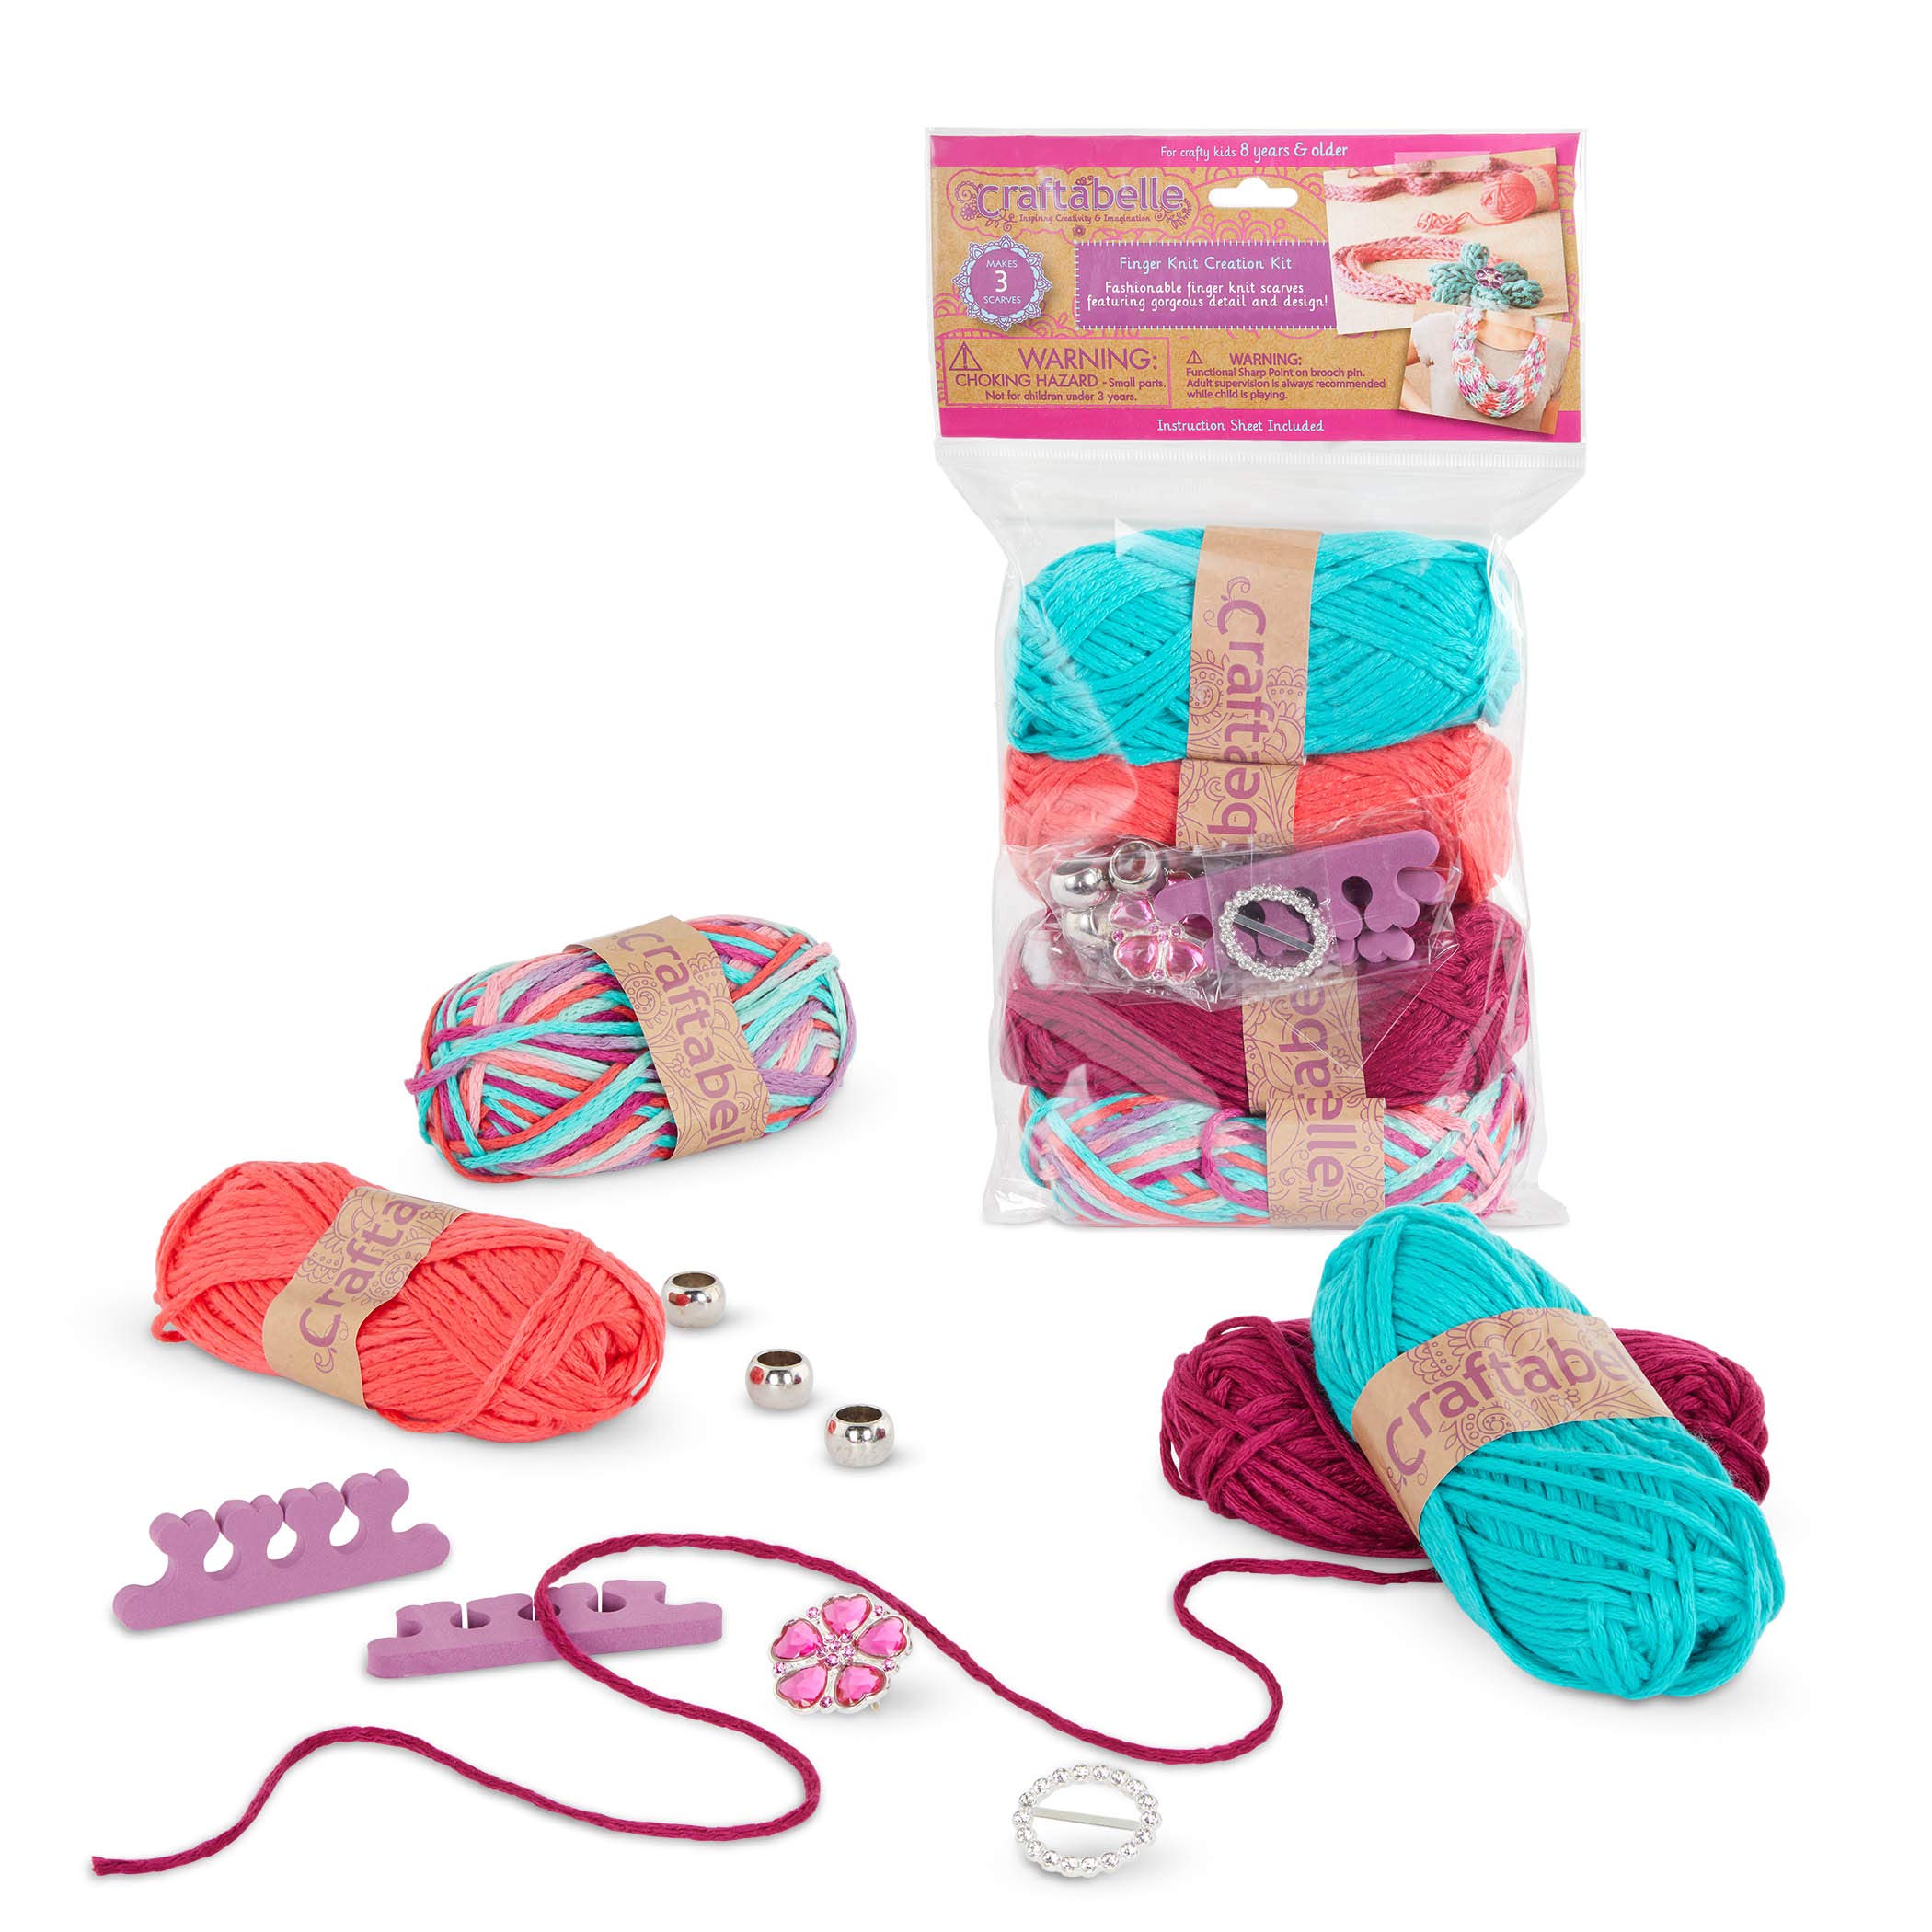 Kids knitting kits